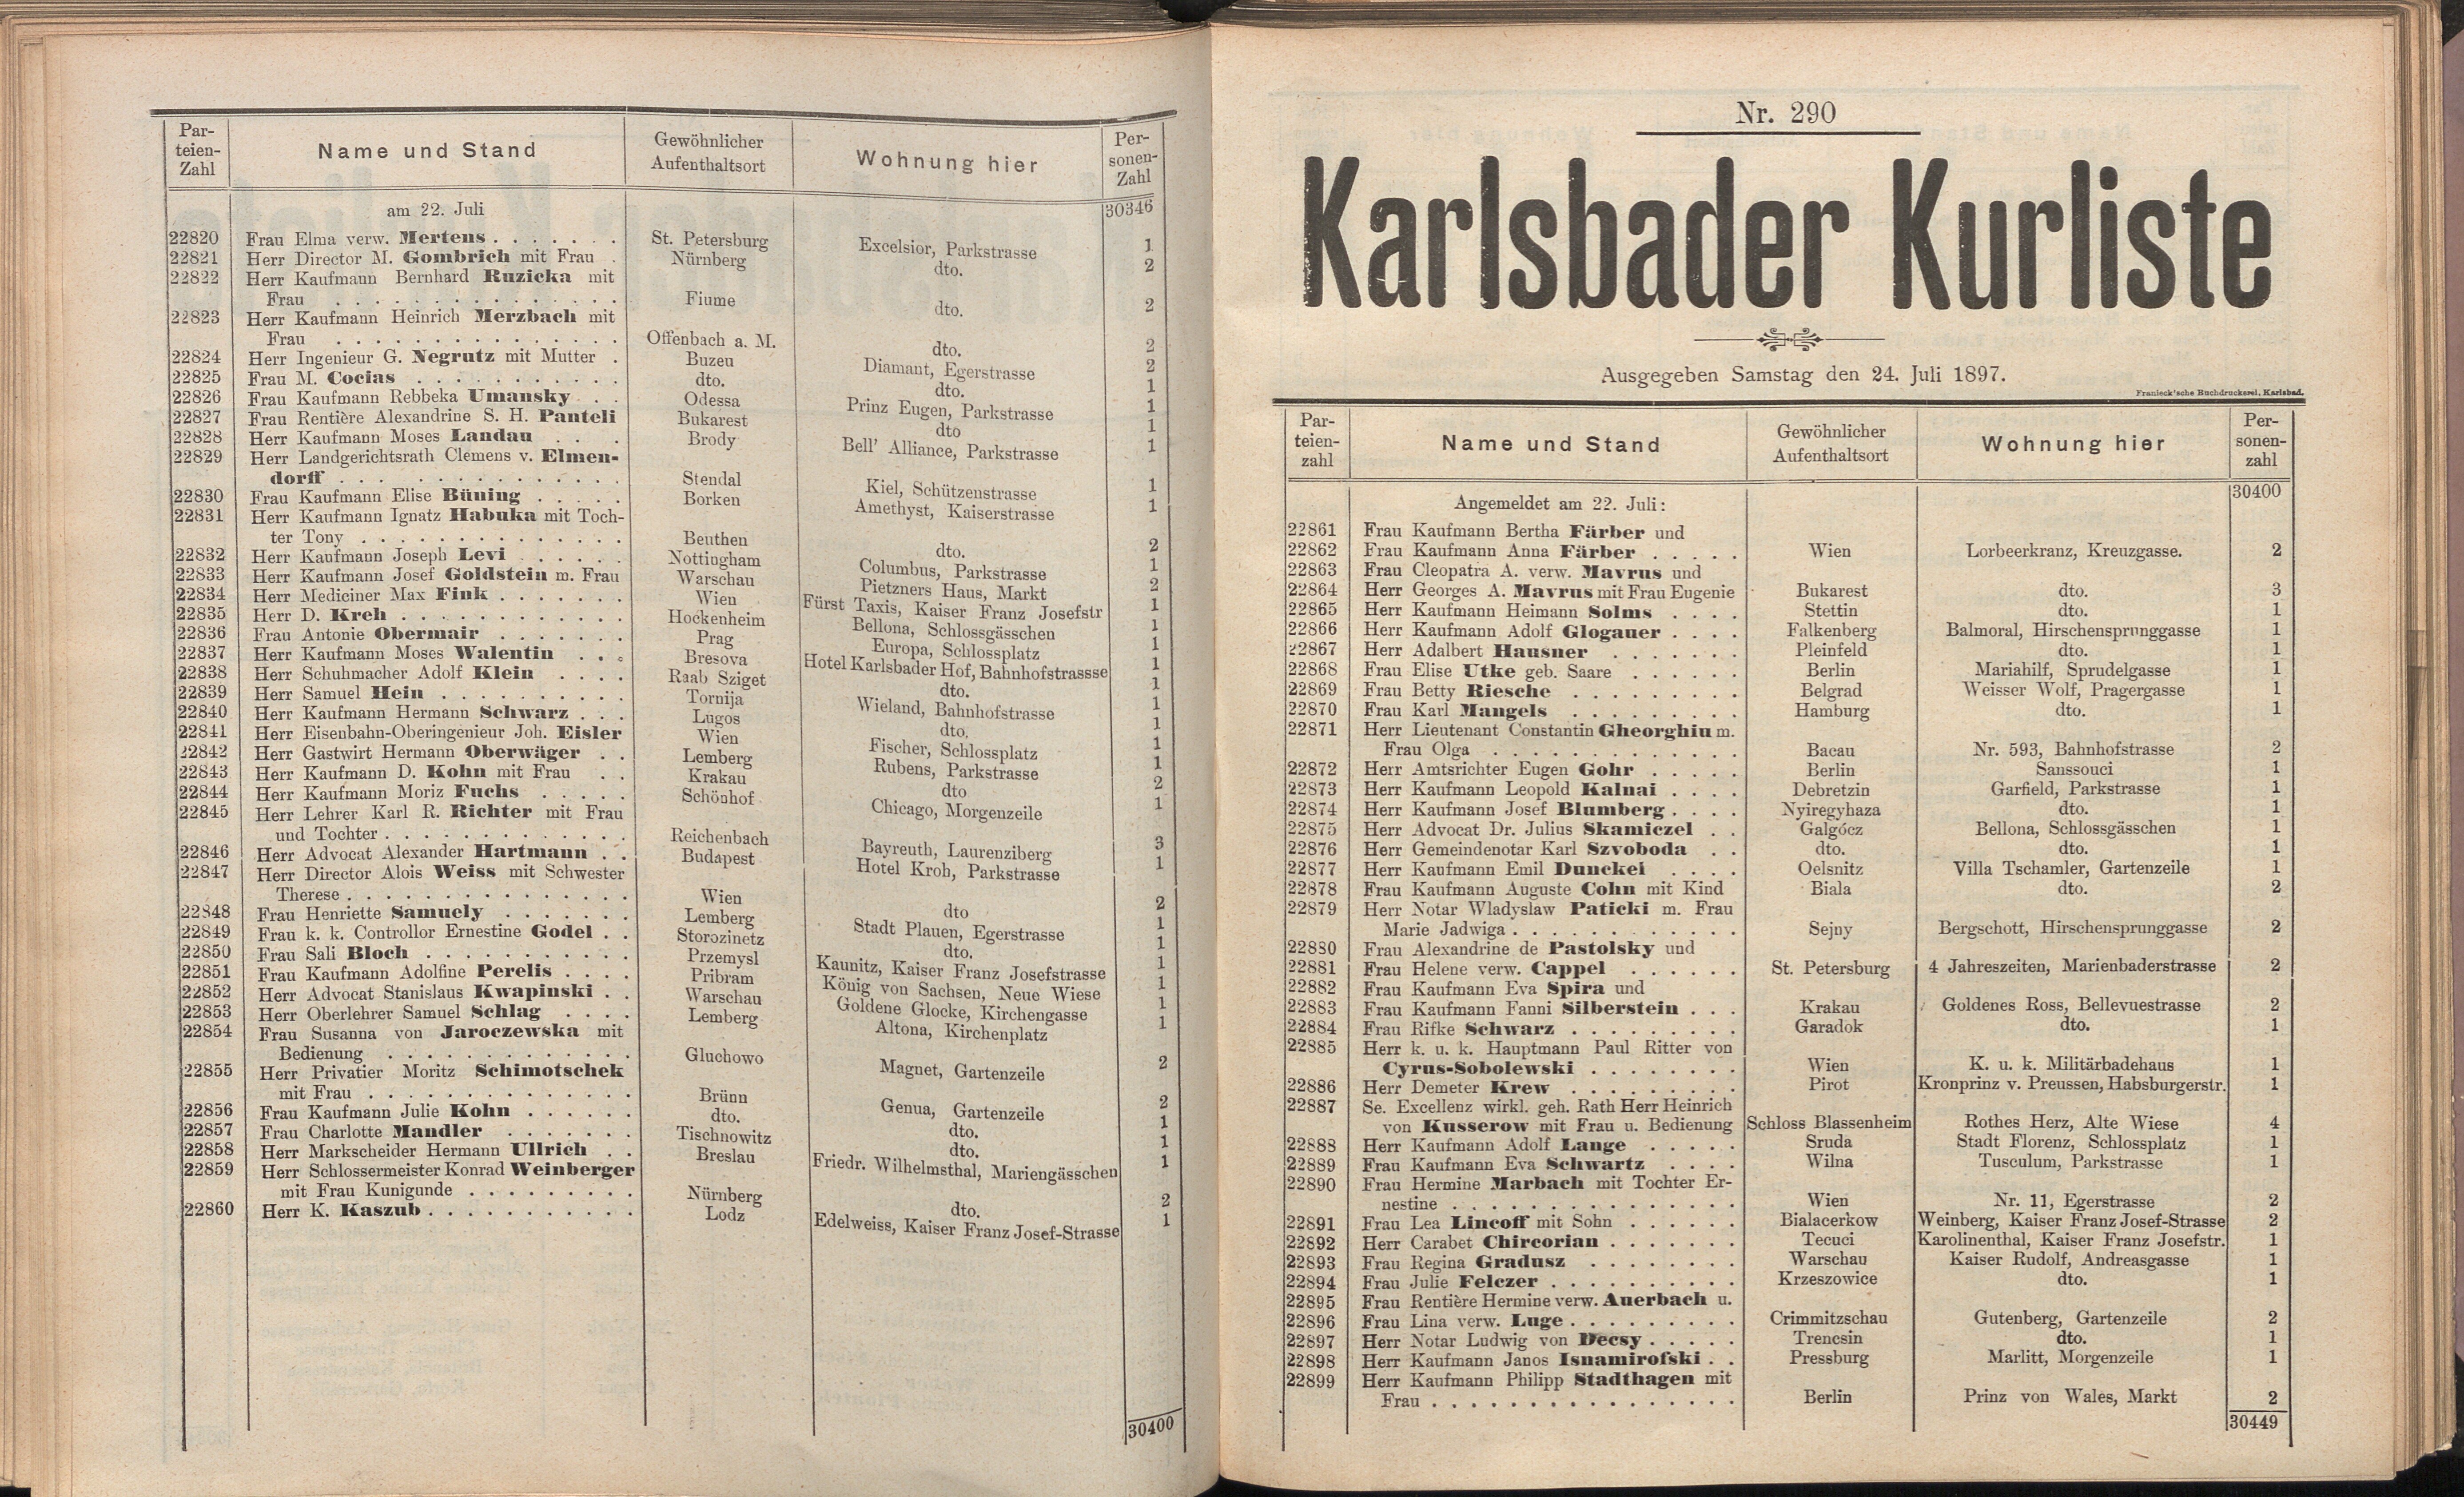 309. soap-kv_knihovna_karlsbader-kurliste-1897_3100